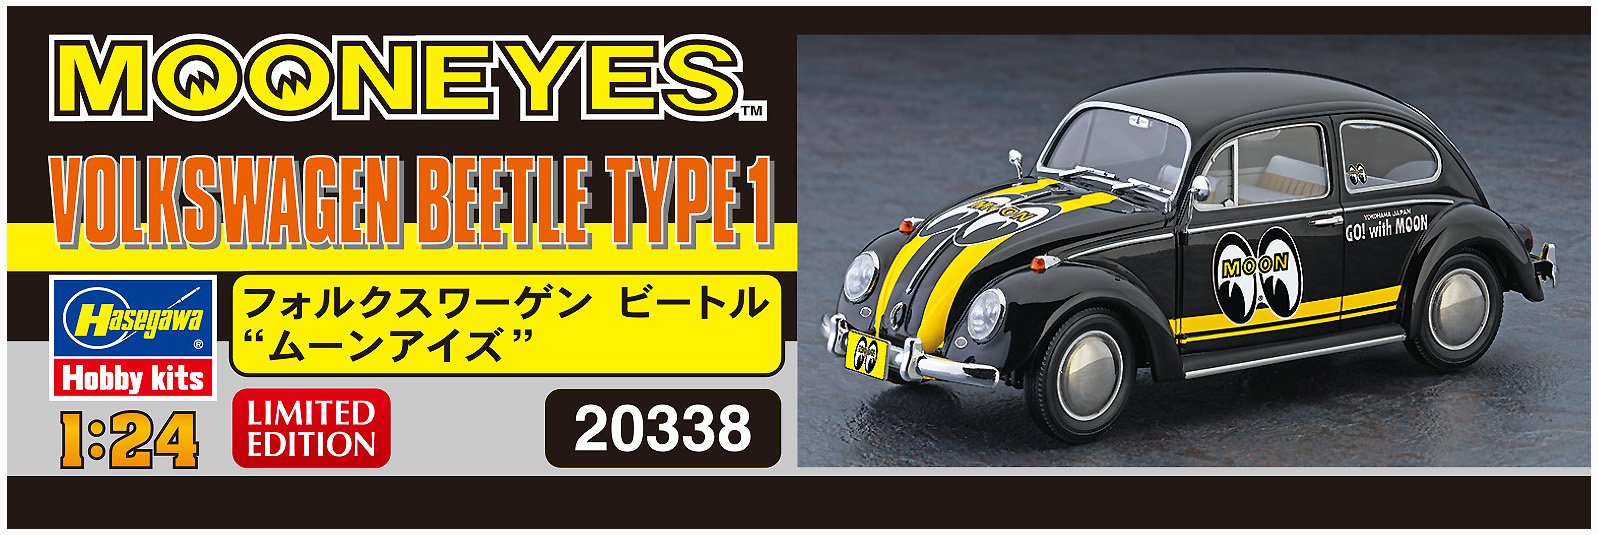 Hasegawa 20338 Volkswagen Beetle Moon Eyes 1/24 Plastic Scale Car Model Kit